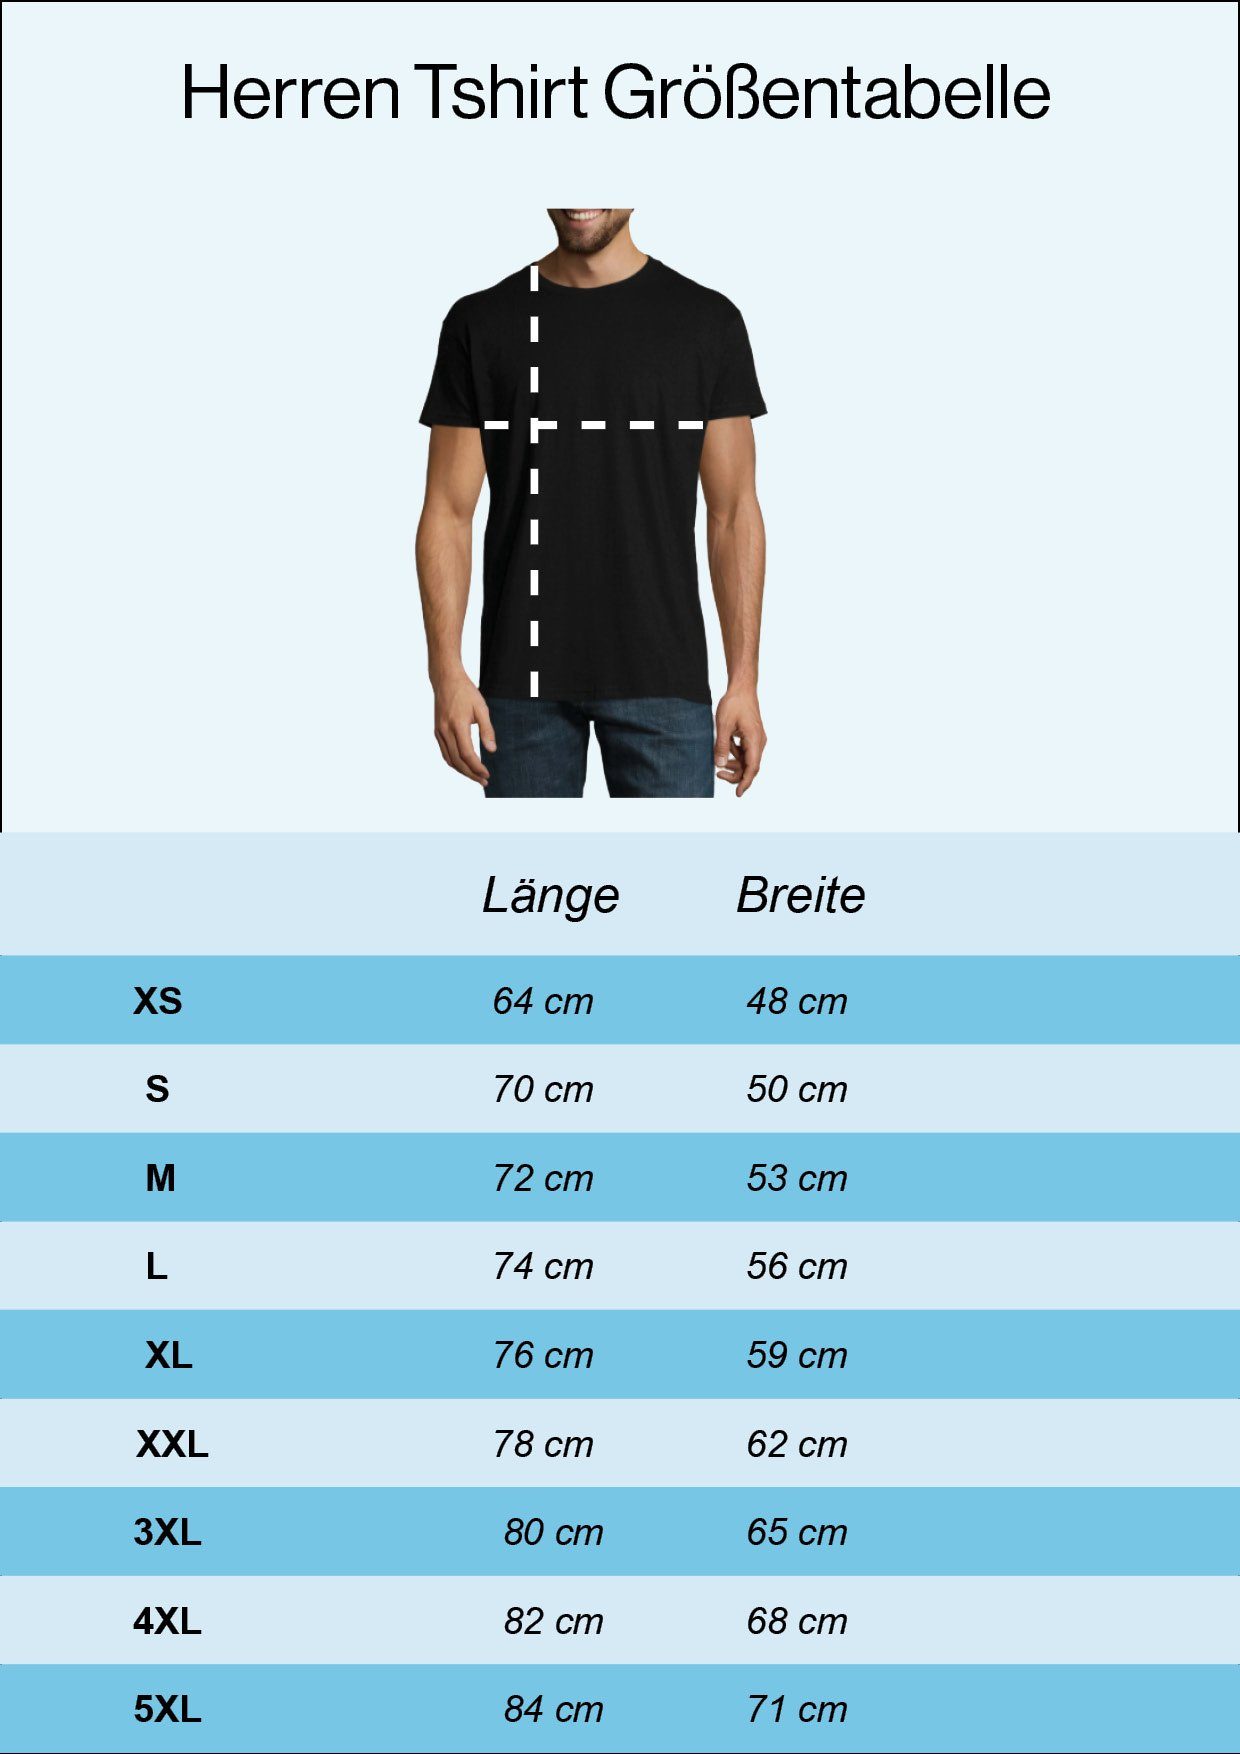 Navyblau Shirt Youth Chill Faultier trendigem mit T-Shirt Designz Herren Frontprint Bro